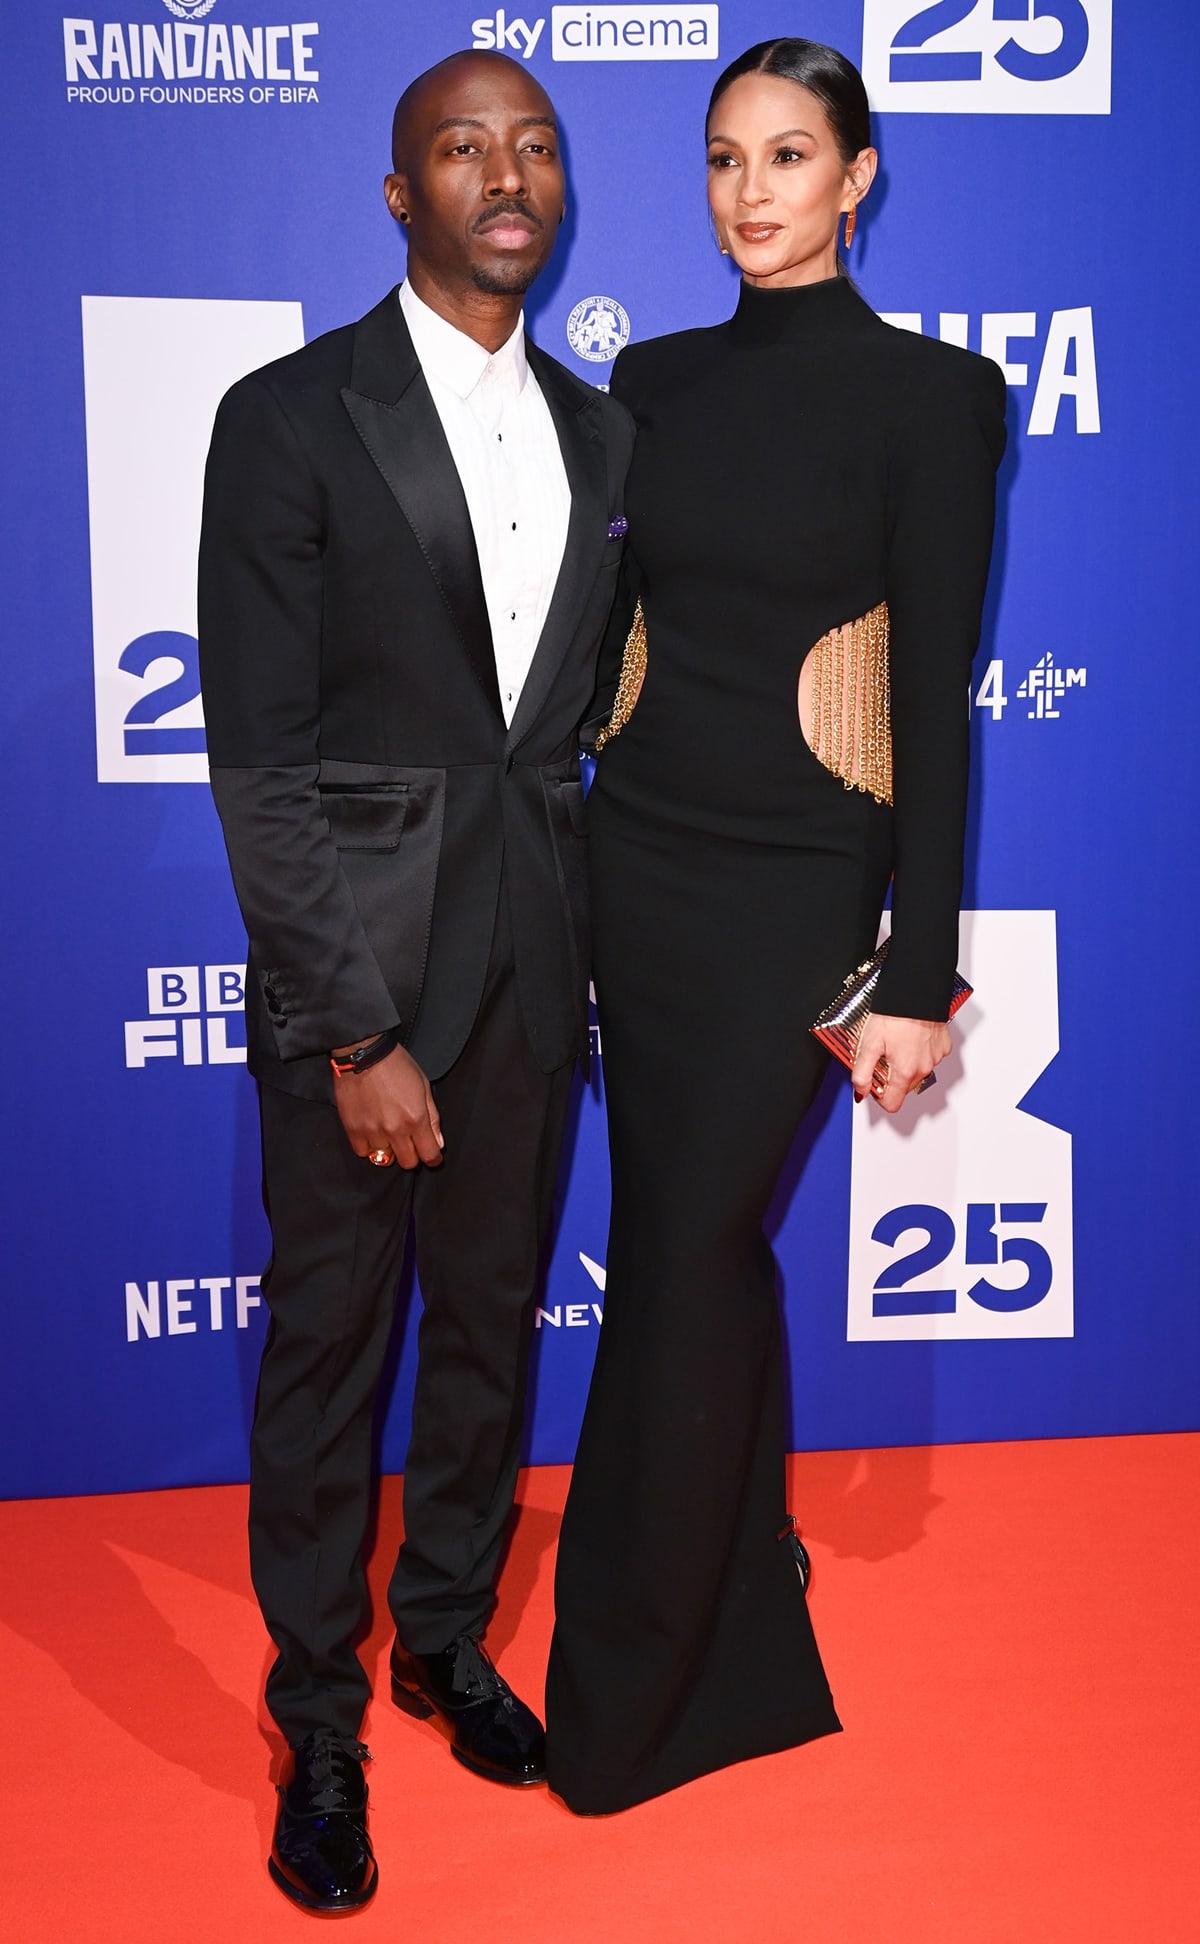 Alesha Dixon, in a black Jean-Louis Sabaji gold chain dress, and her husband Azuka Ononye attend the British Independent Film Awards 2022